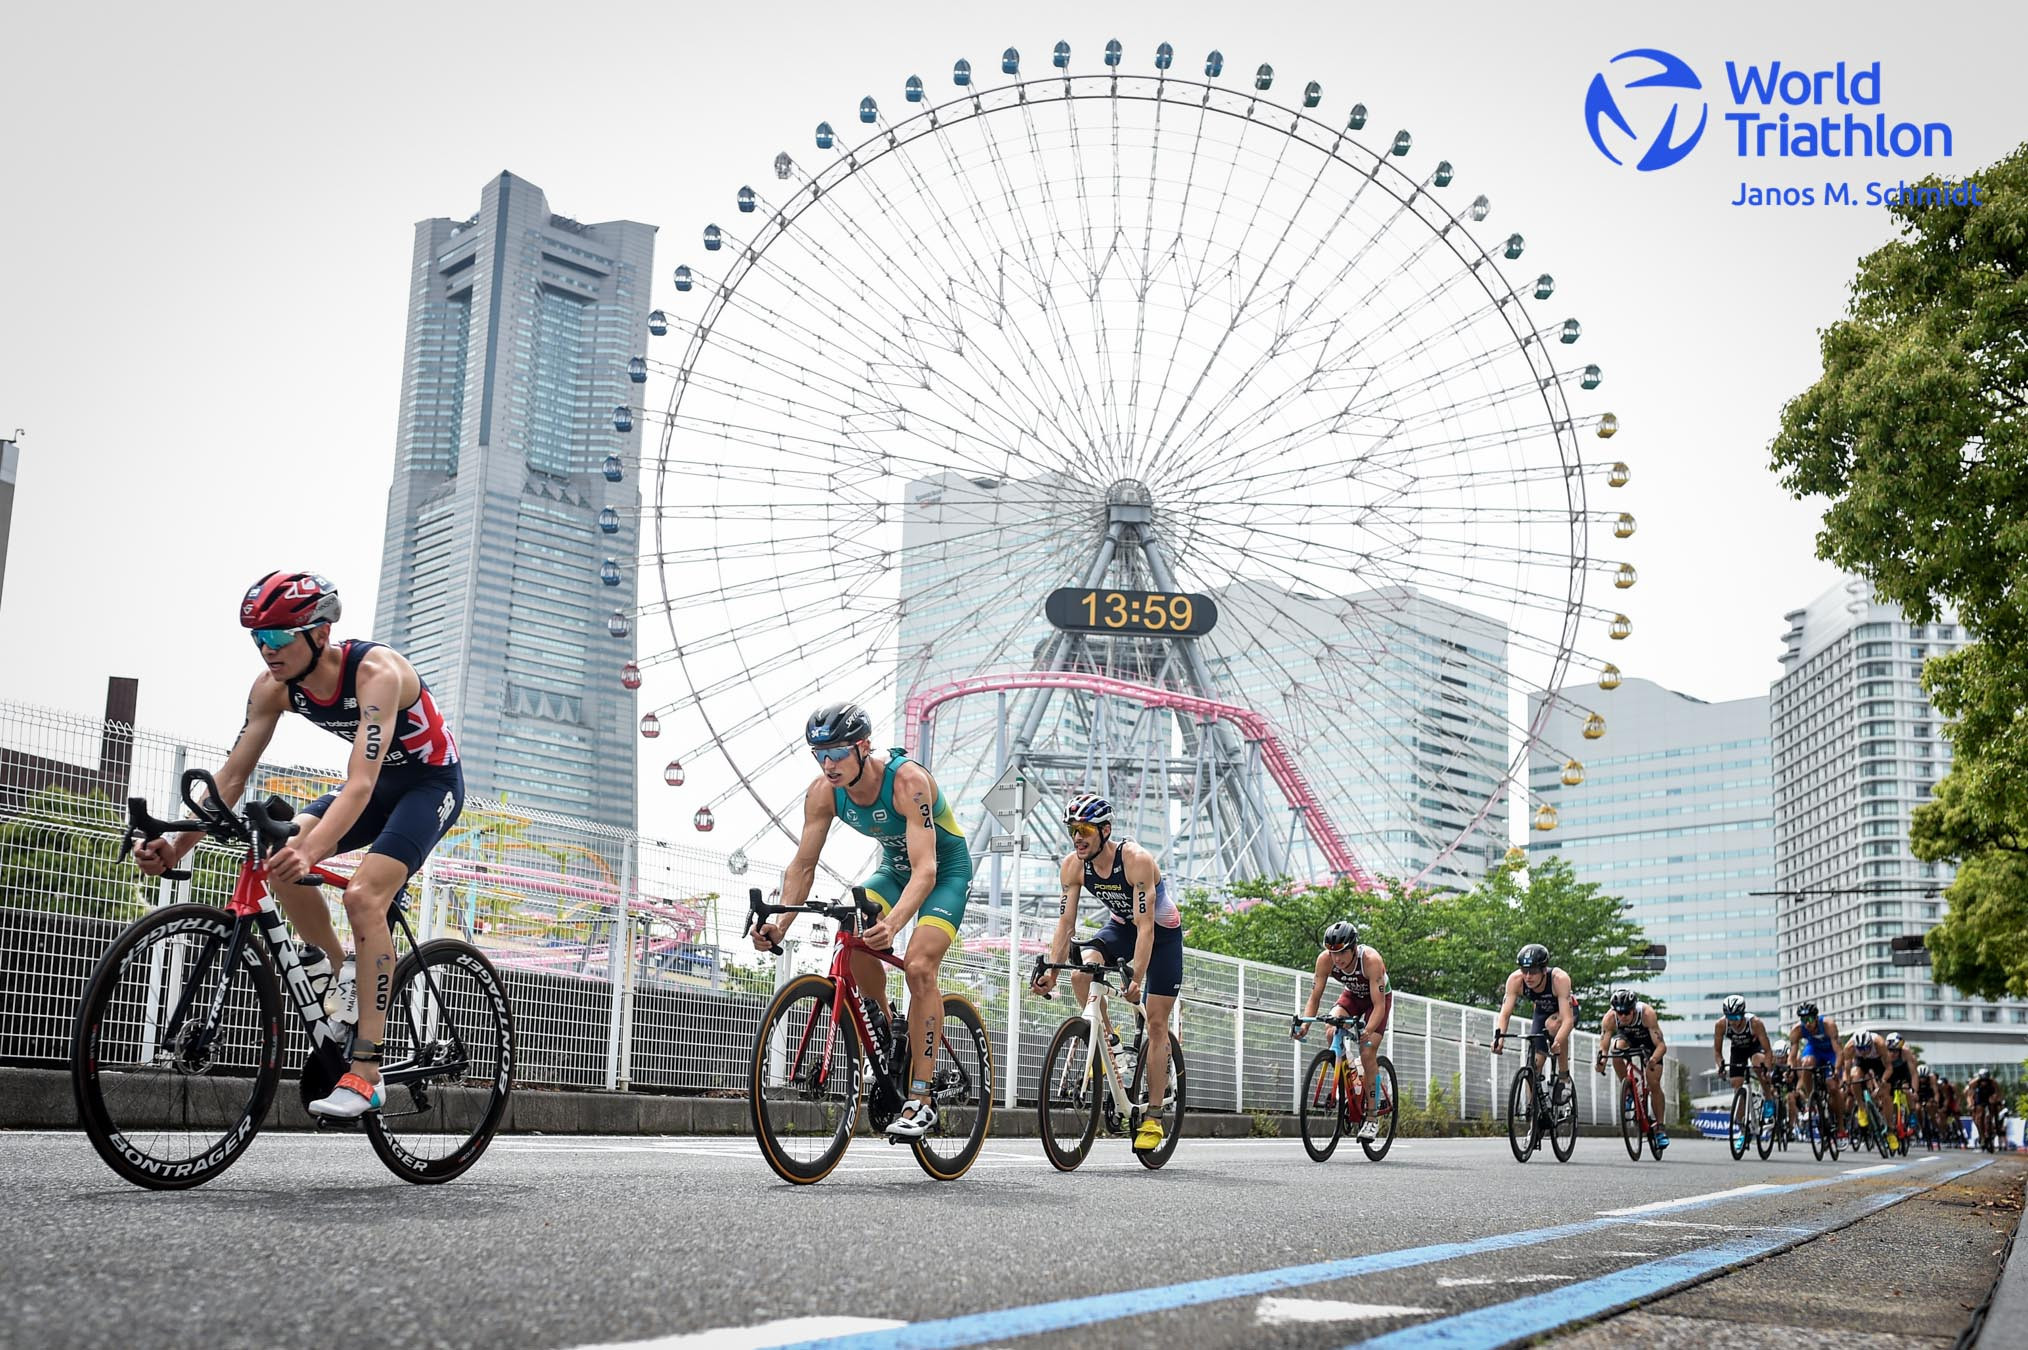 Yokohama held this season's opener, and is a stop once again on the World Triathlon Championship Series for 2023 ©World Triathlon